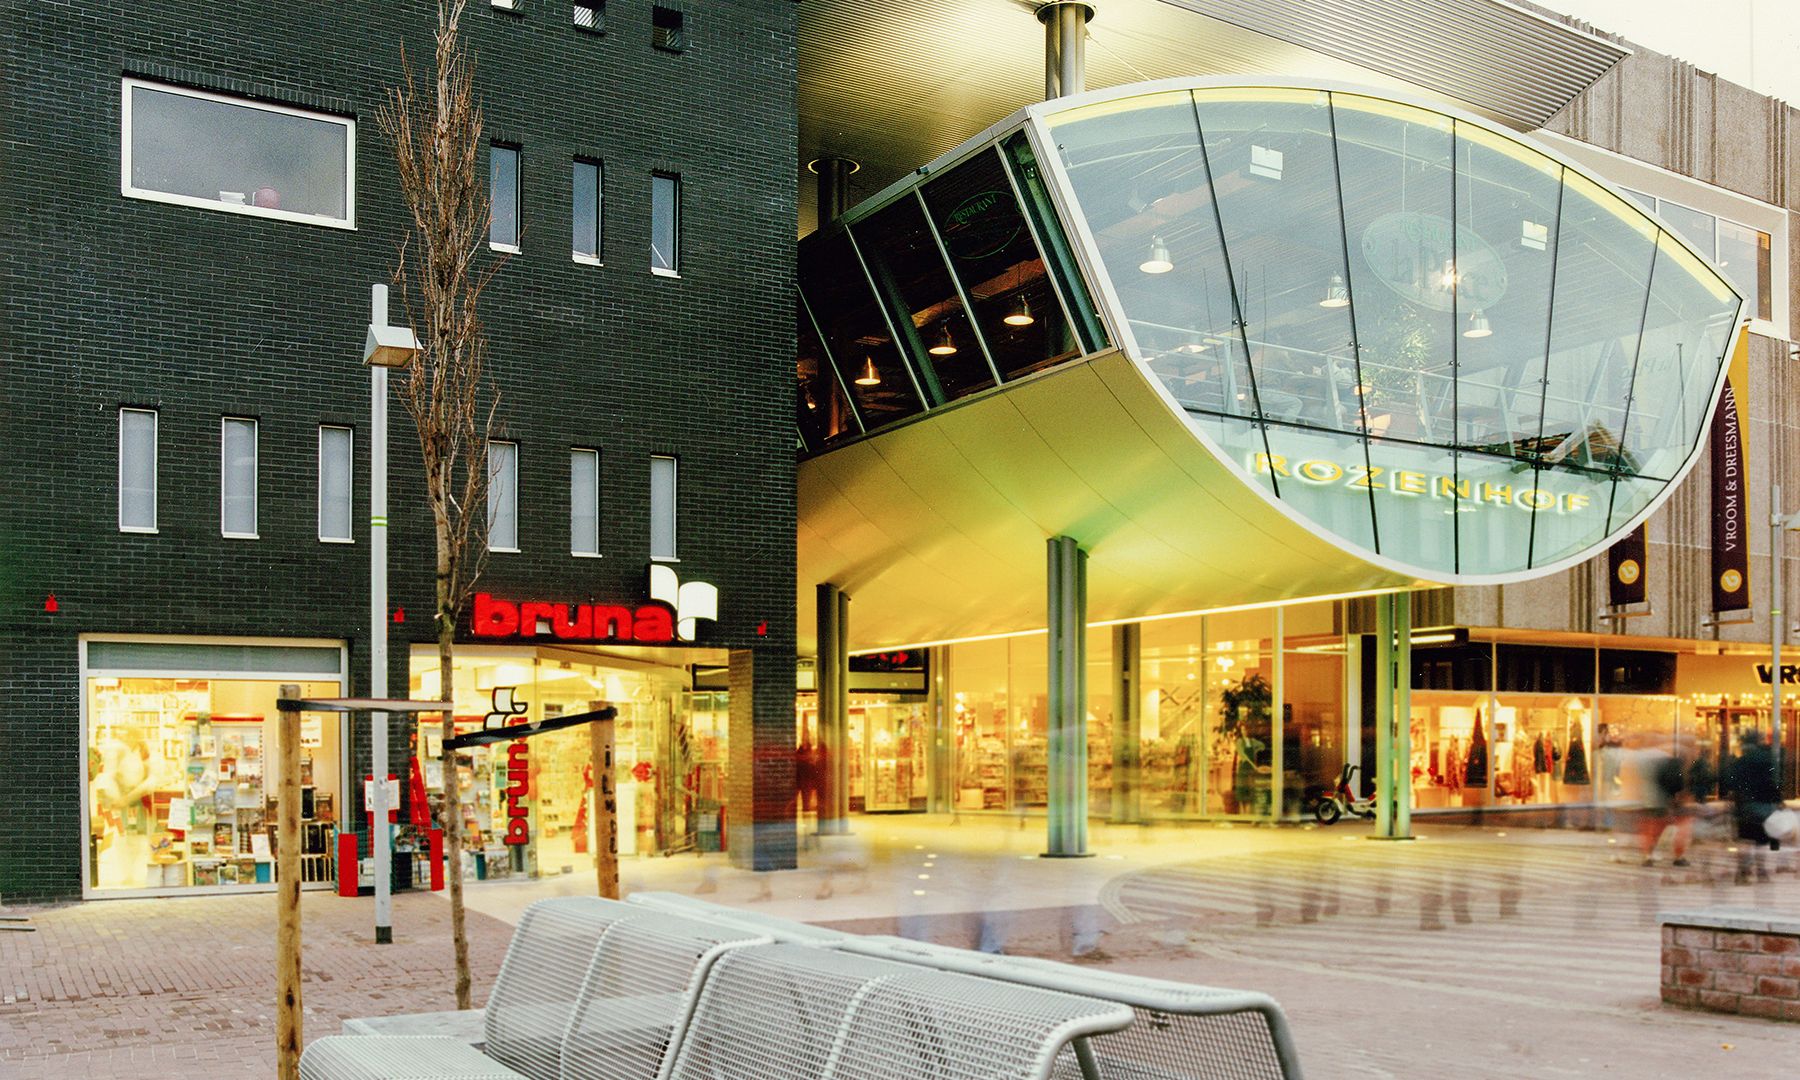 Shopping centre Rozenhof - Zaandam, Engelman Architecten